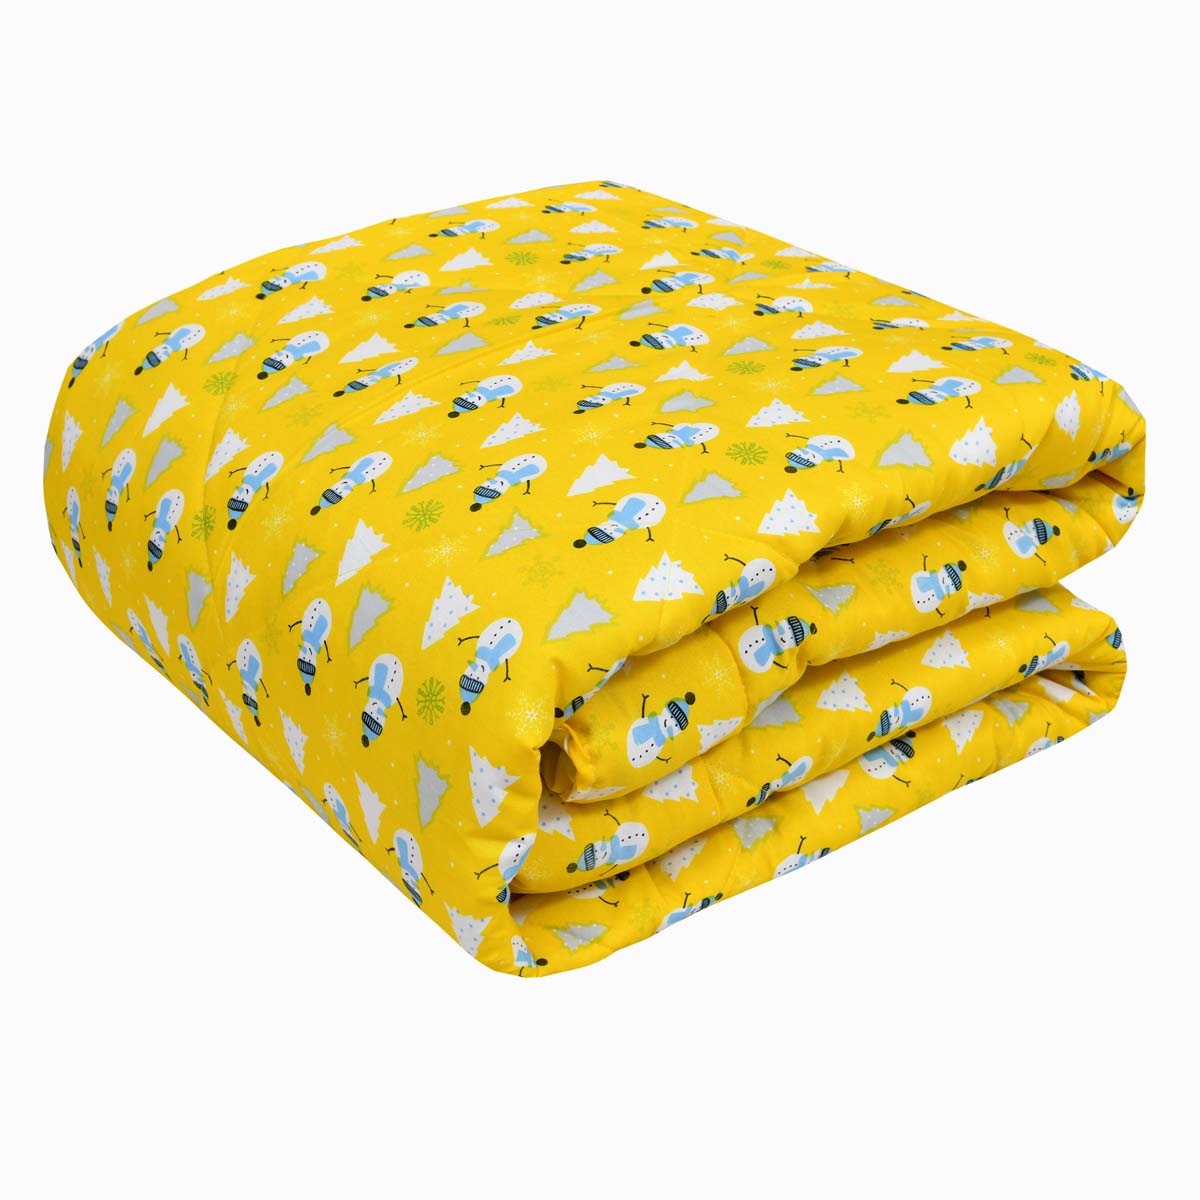 Eskimo Yellow Single Bed Kids Comforter